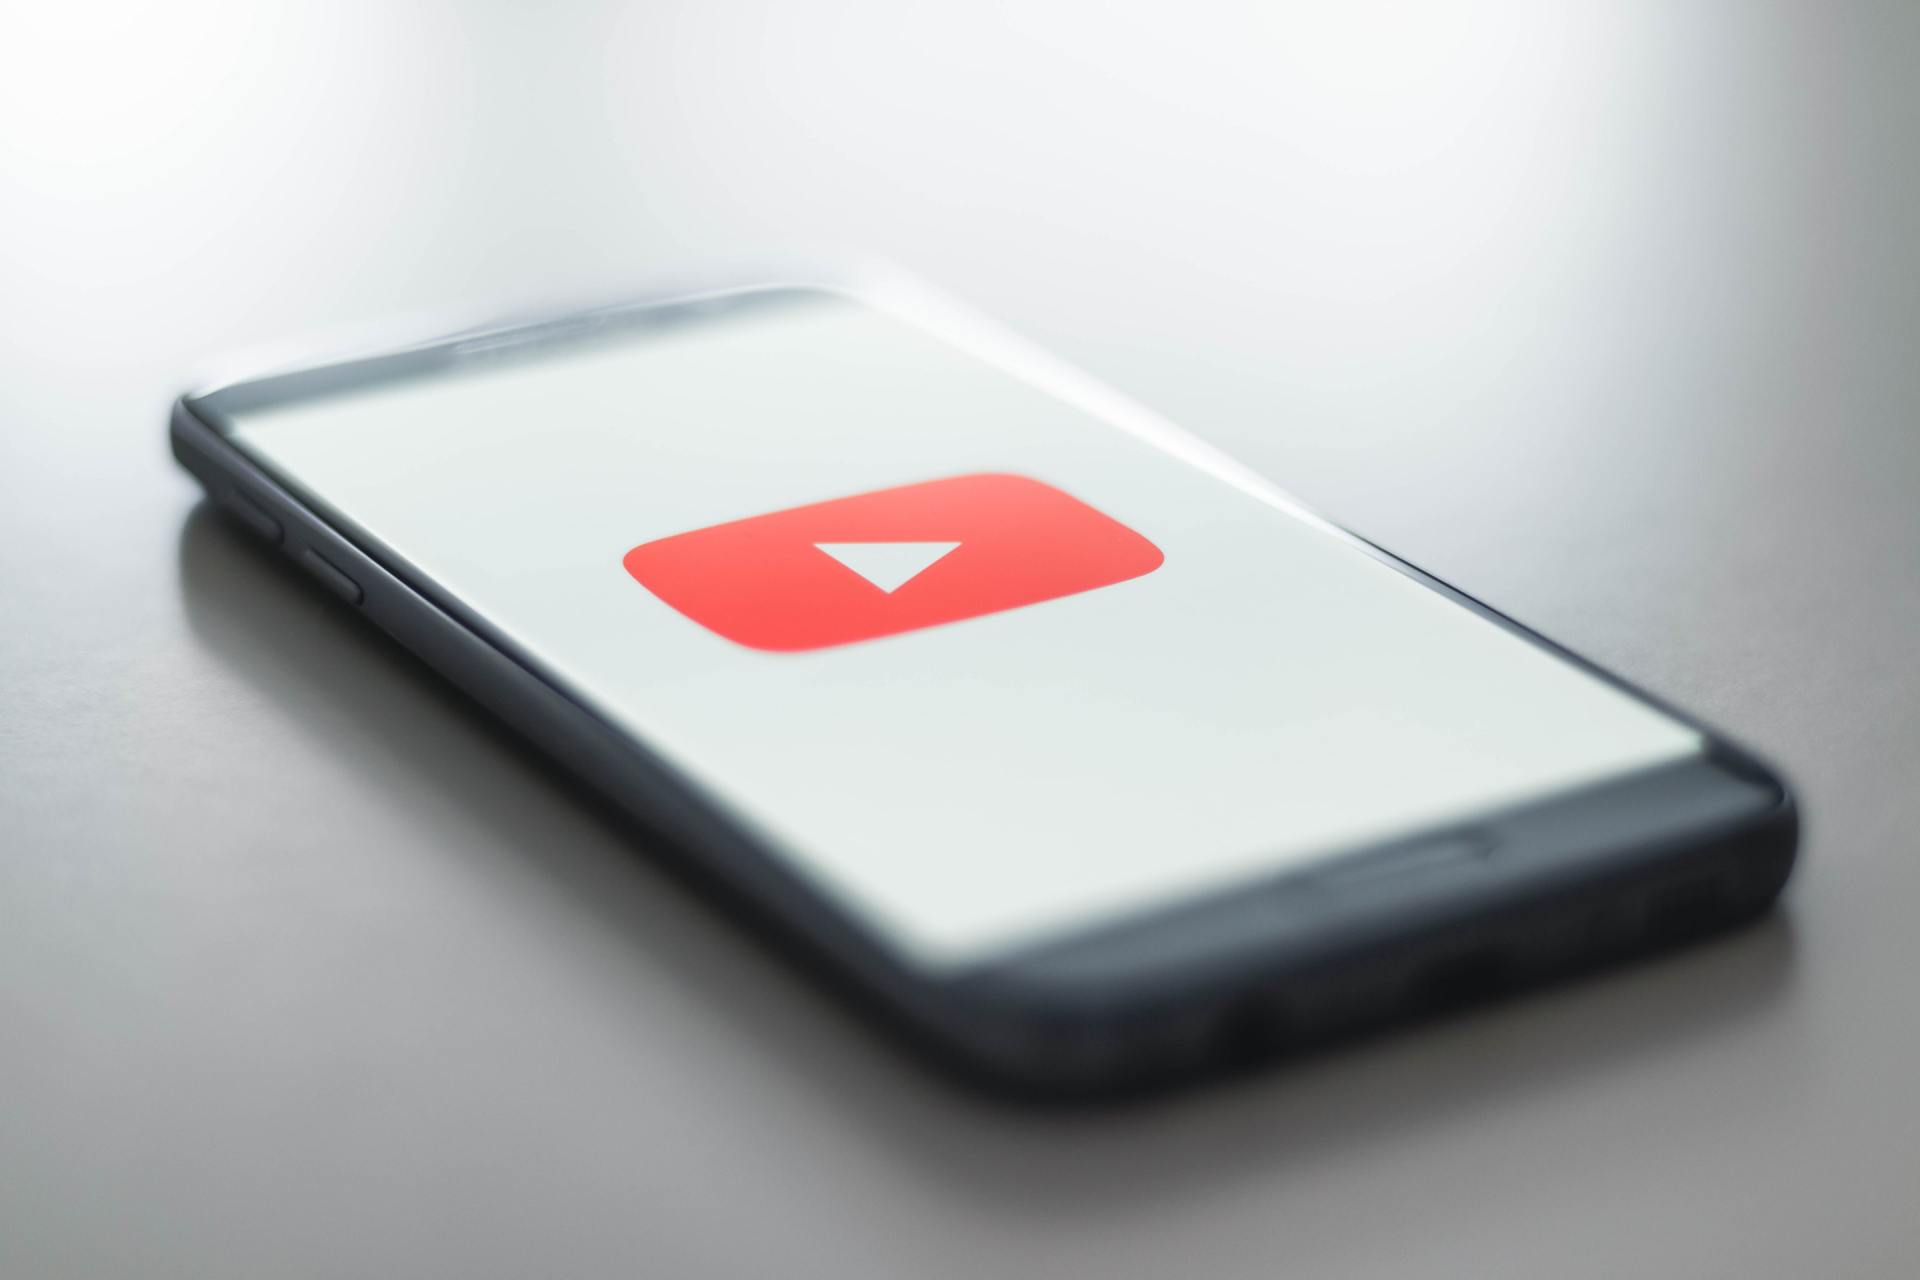 Youtube logo on mobile phone screen